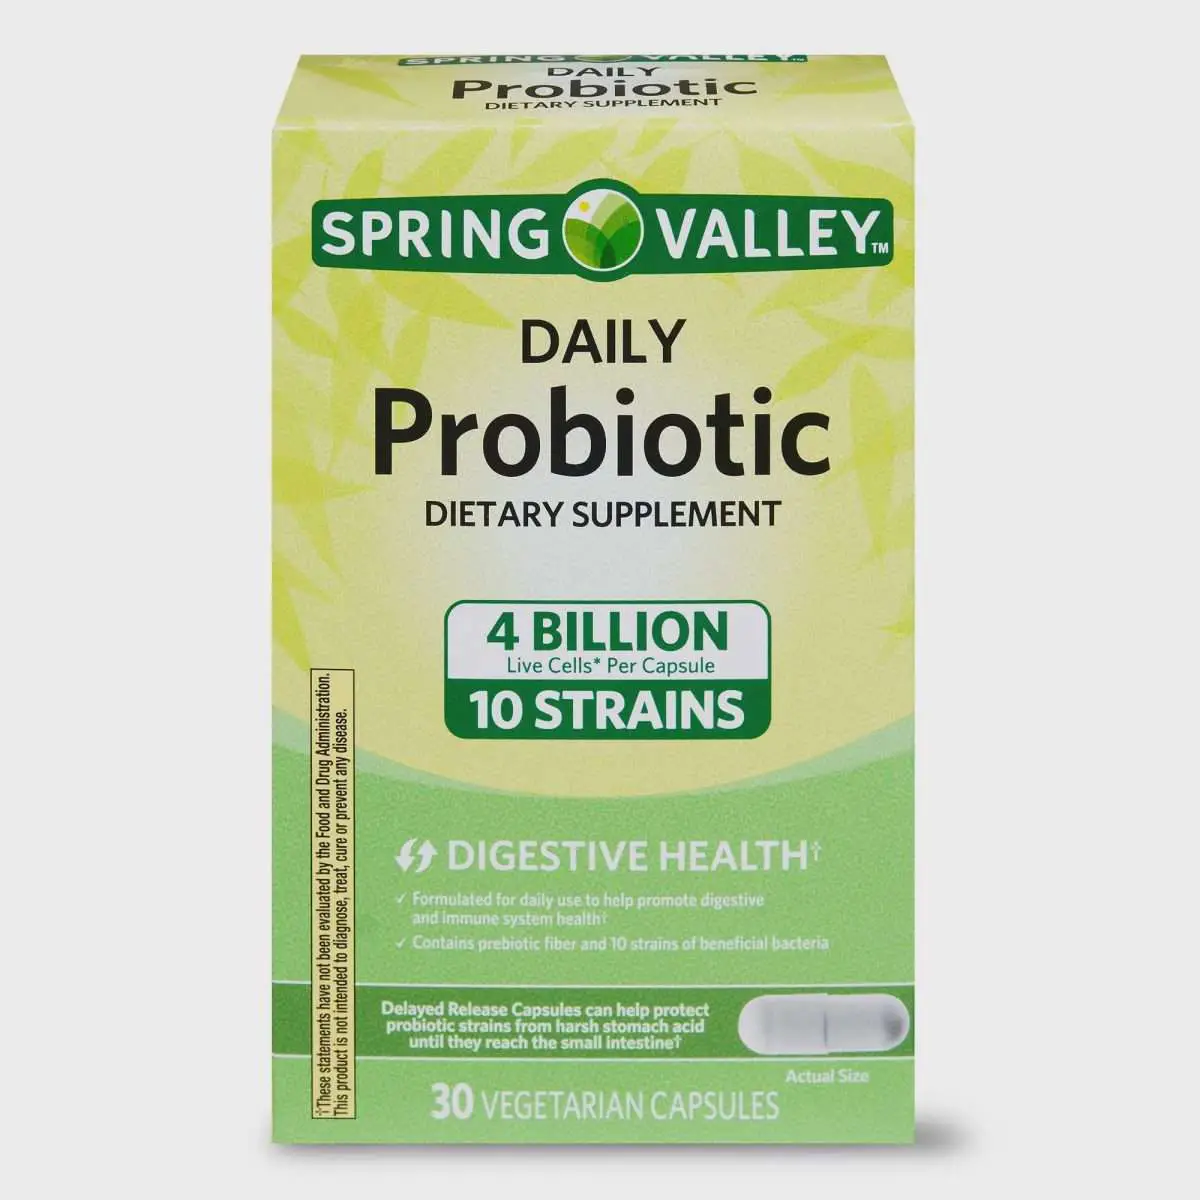 Spring Valley Daily Probiotic Delayed